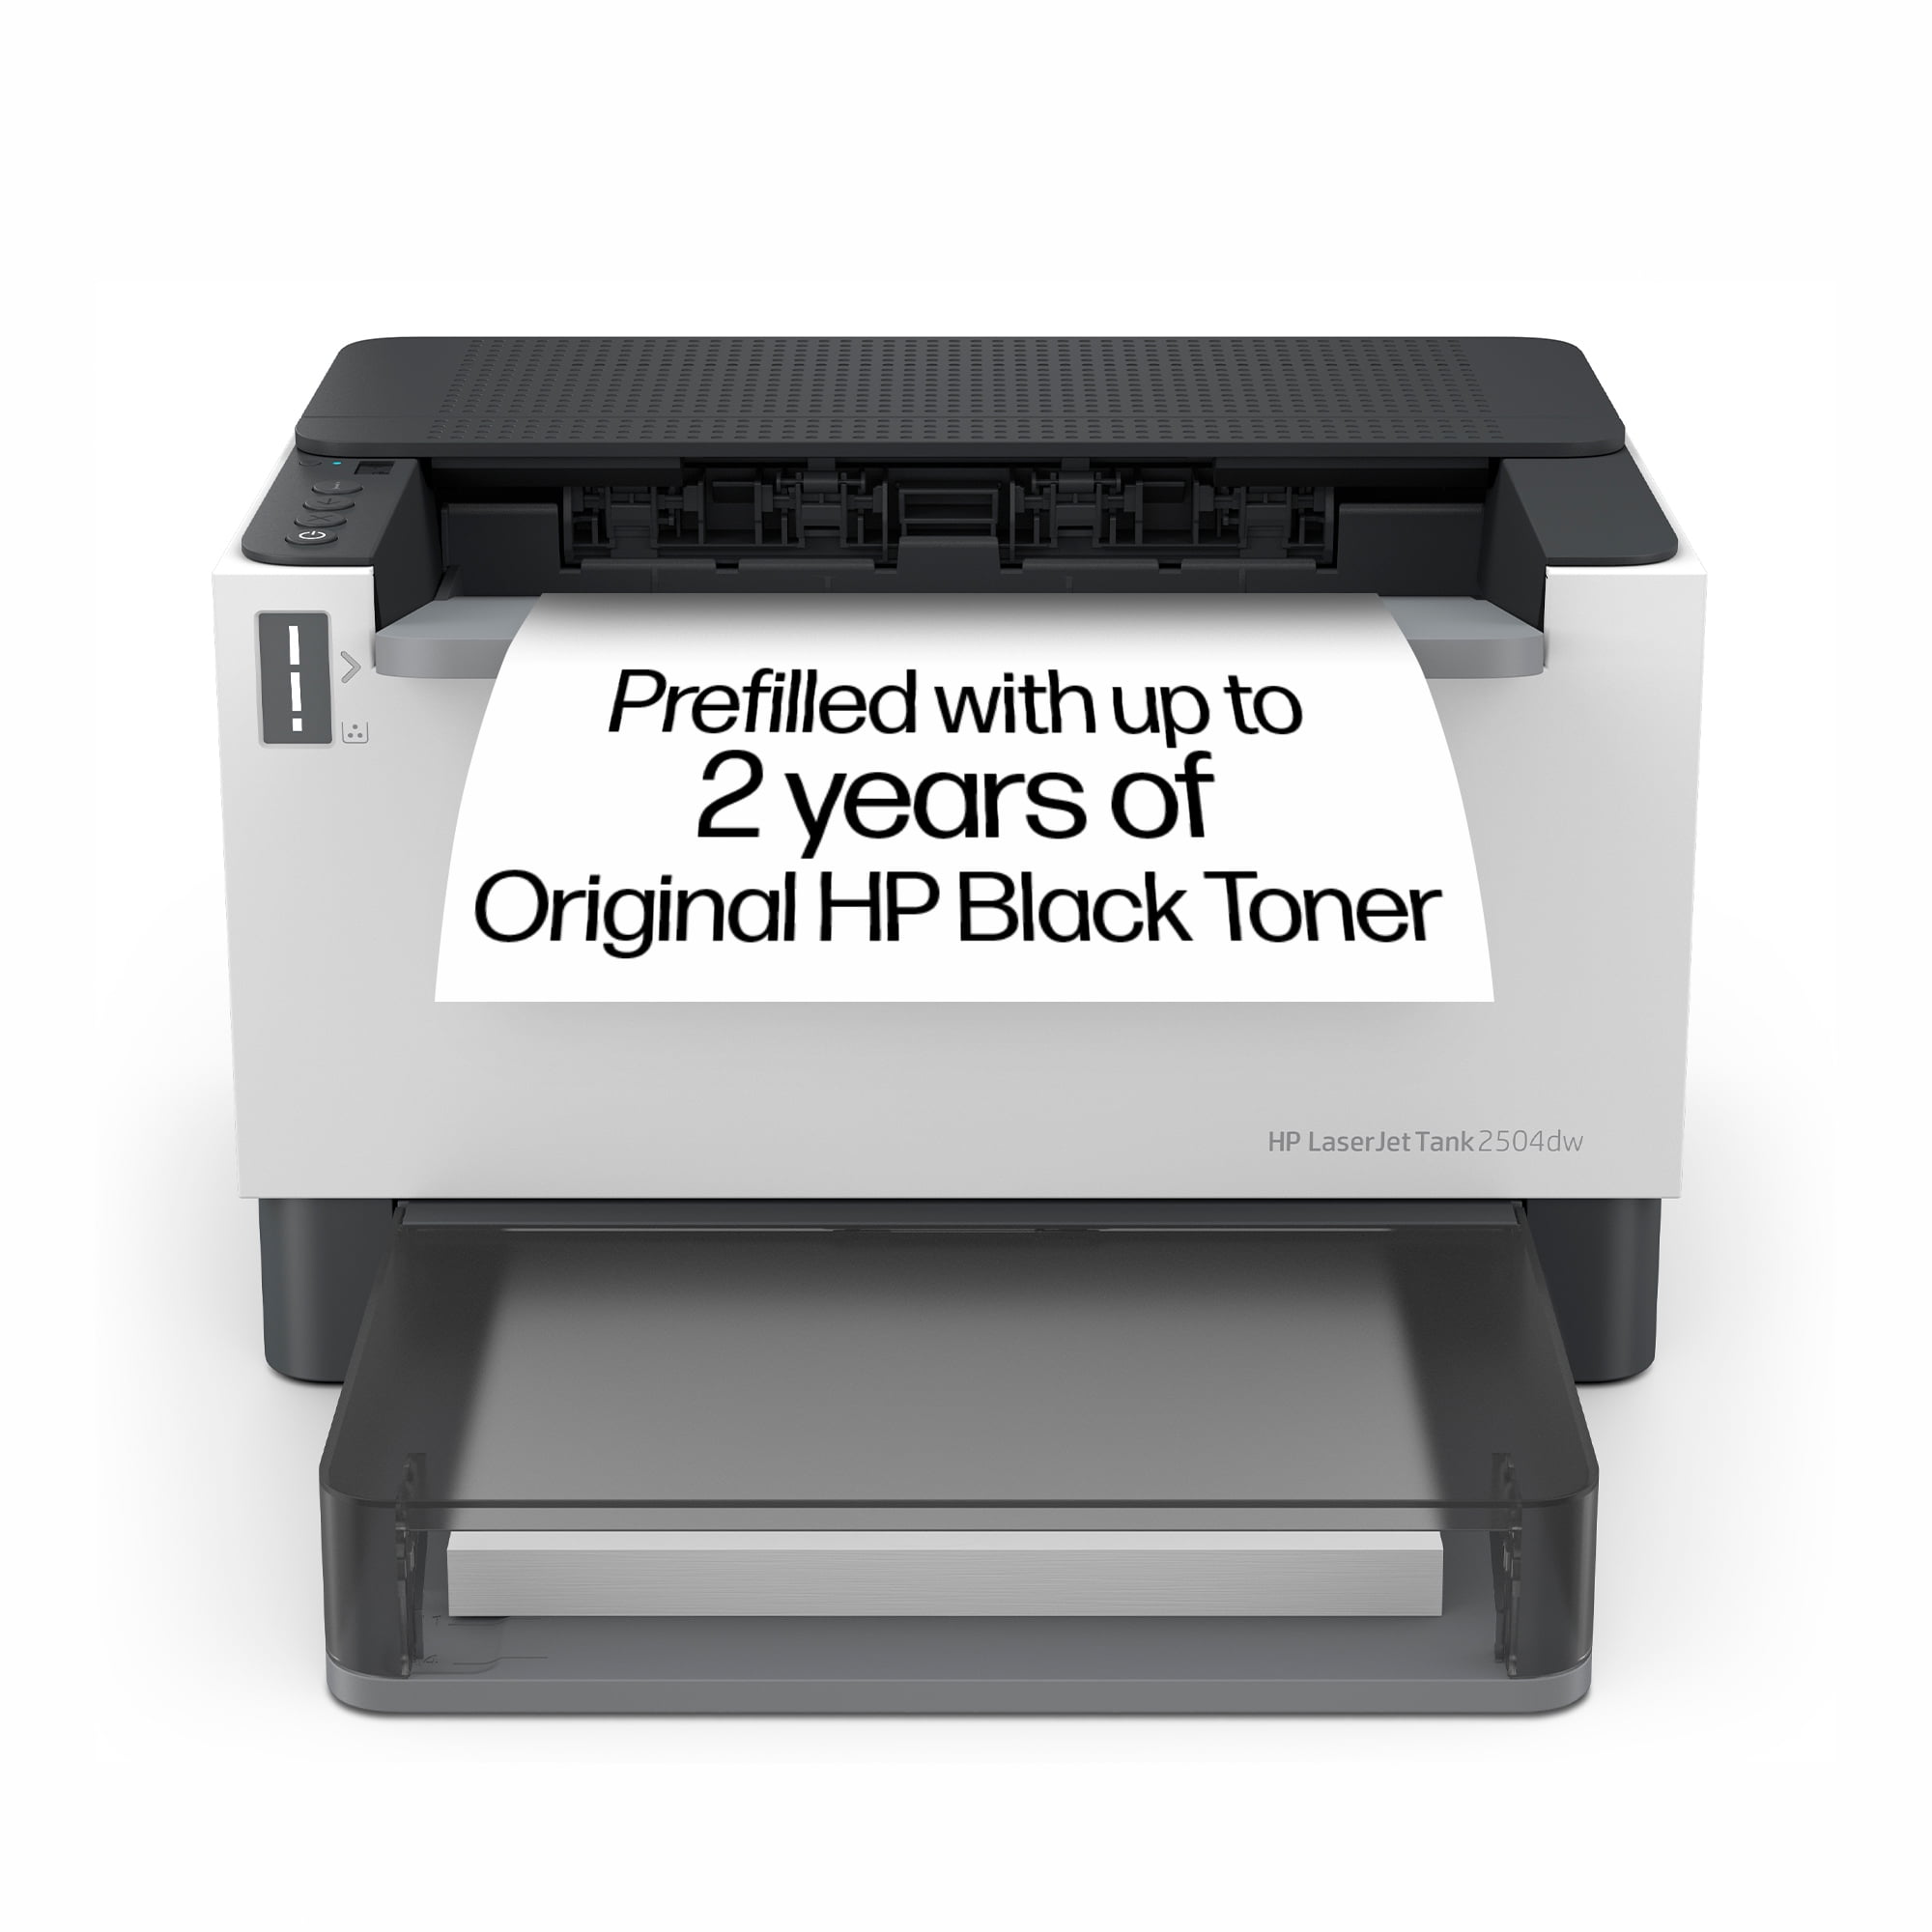 HP LaserJet Tank 2504dw Wireless Black-and-White Laser Printer up 5,000 pages